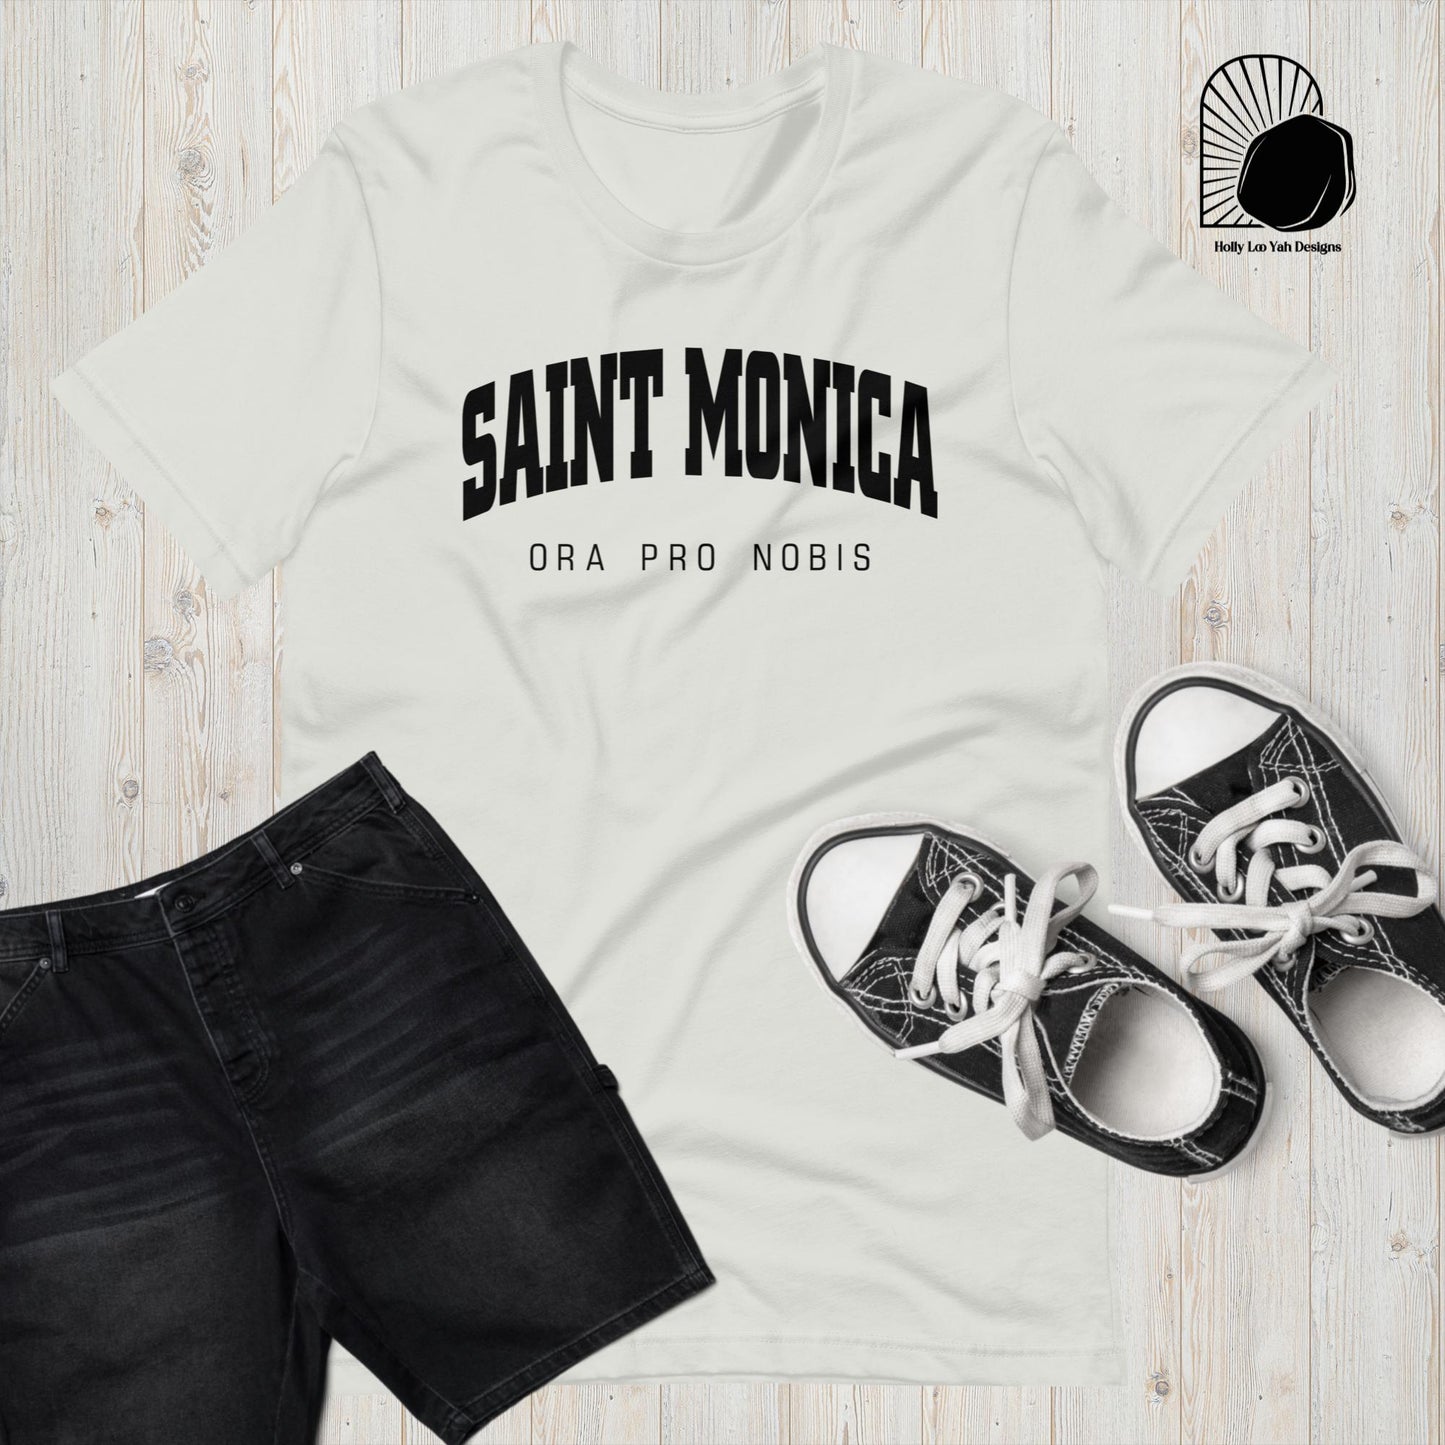 Saint Monica Ora Pro Nobis University Style T-shirt in silver